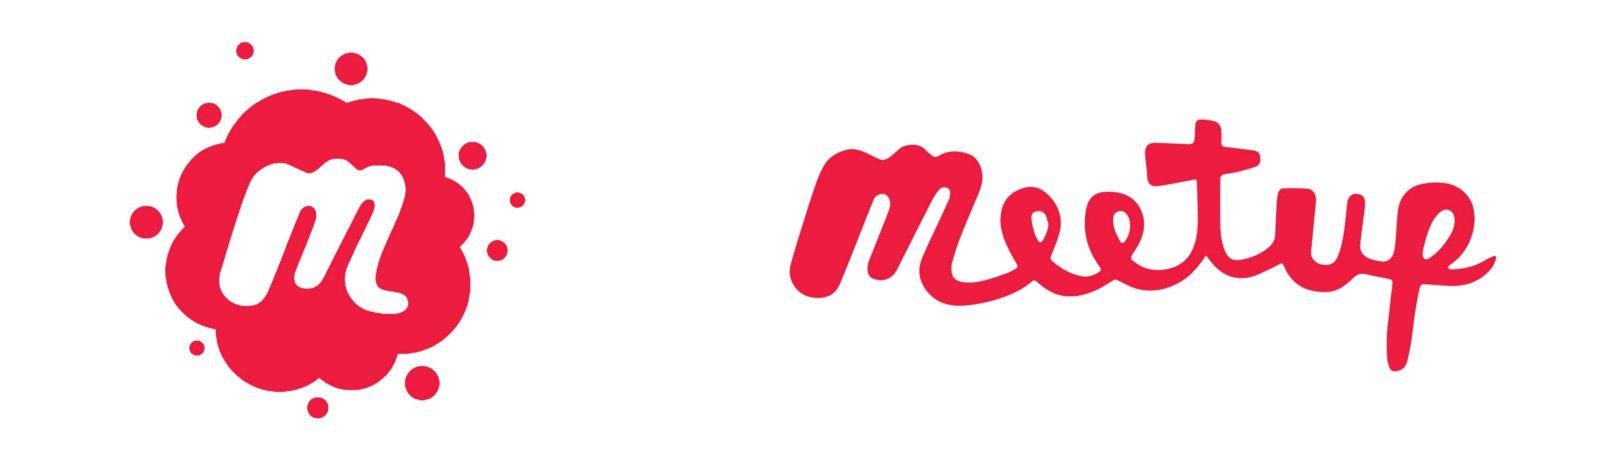 Meetup Logo - Most Influential Rebrands of 2016: Meetup